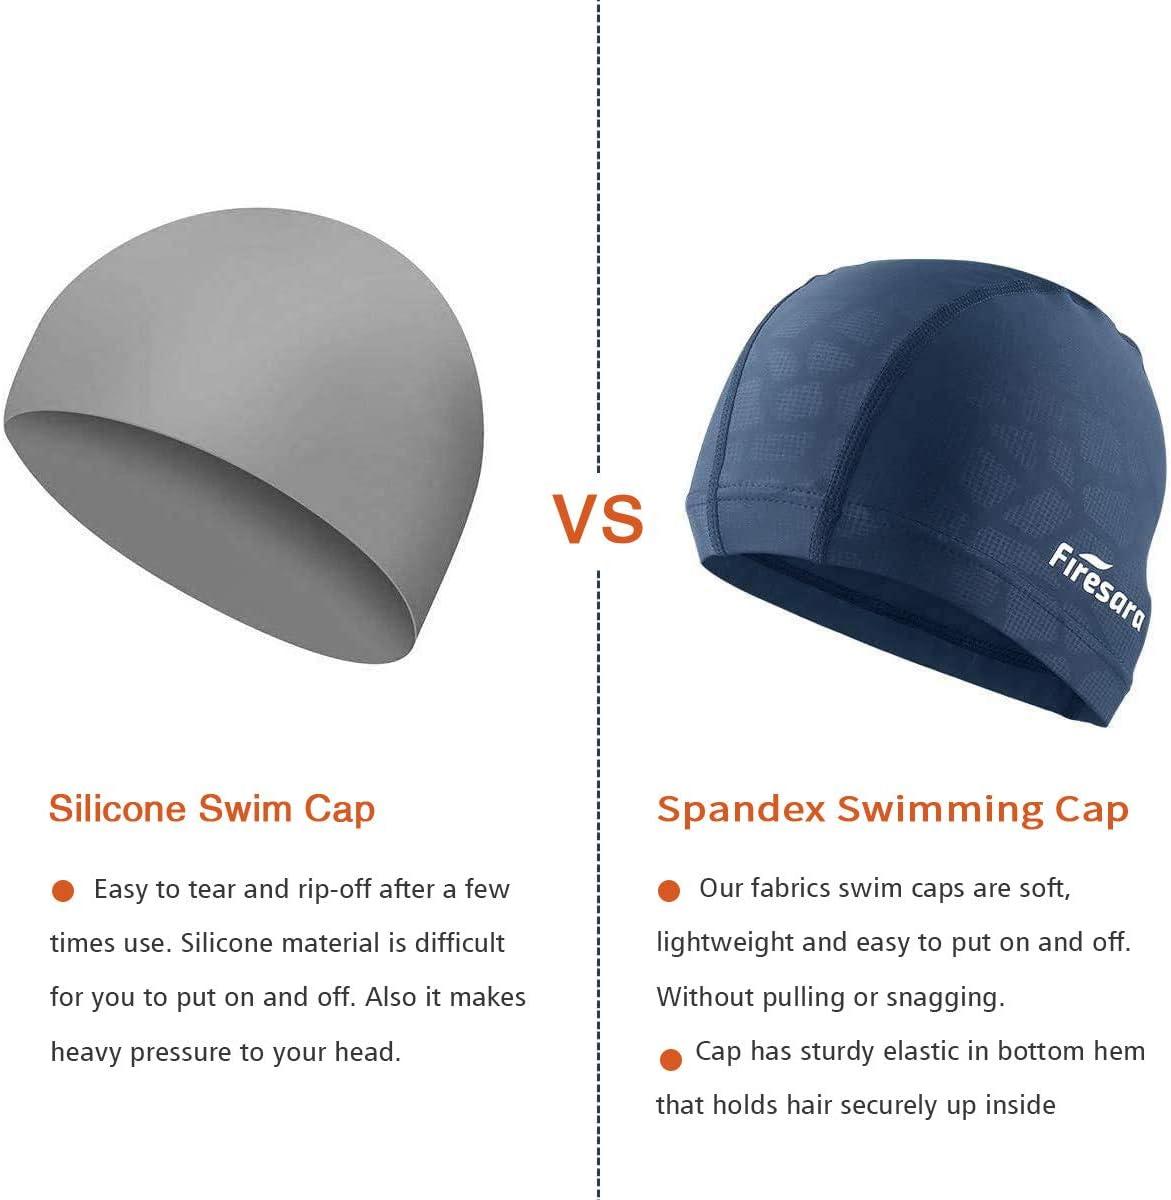 Silicone Swim Cap Characteristics, Advantages and Disadvantages